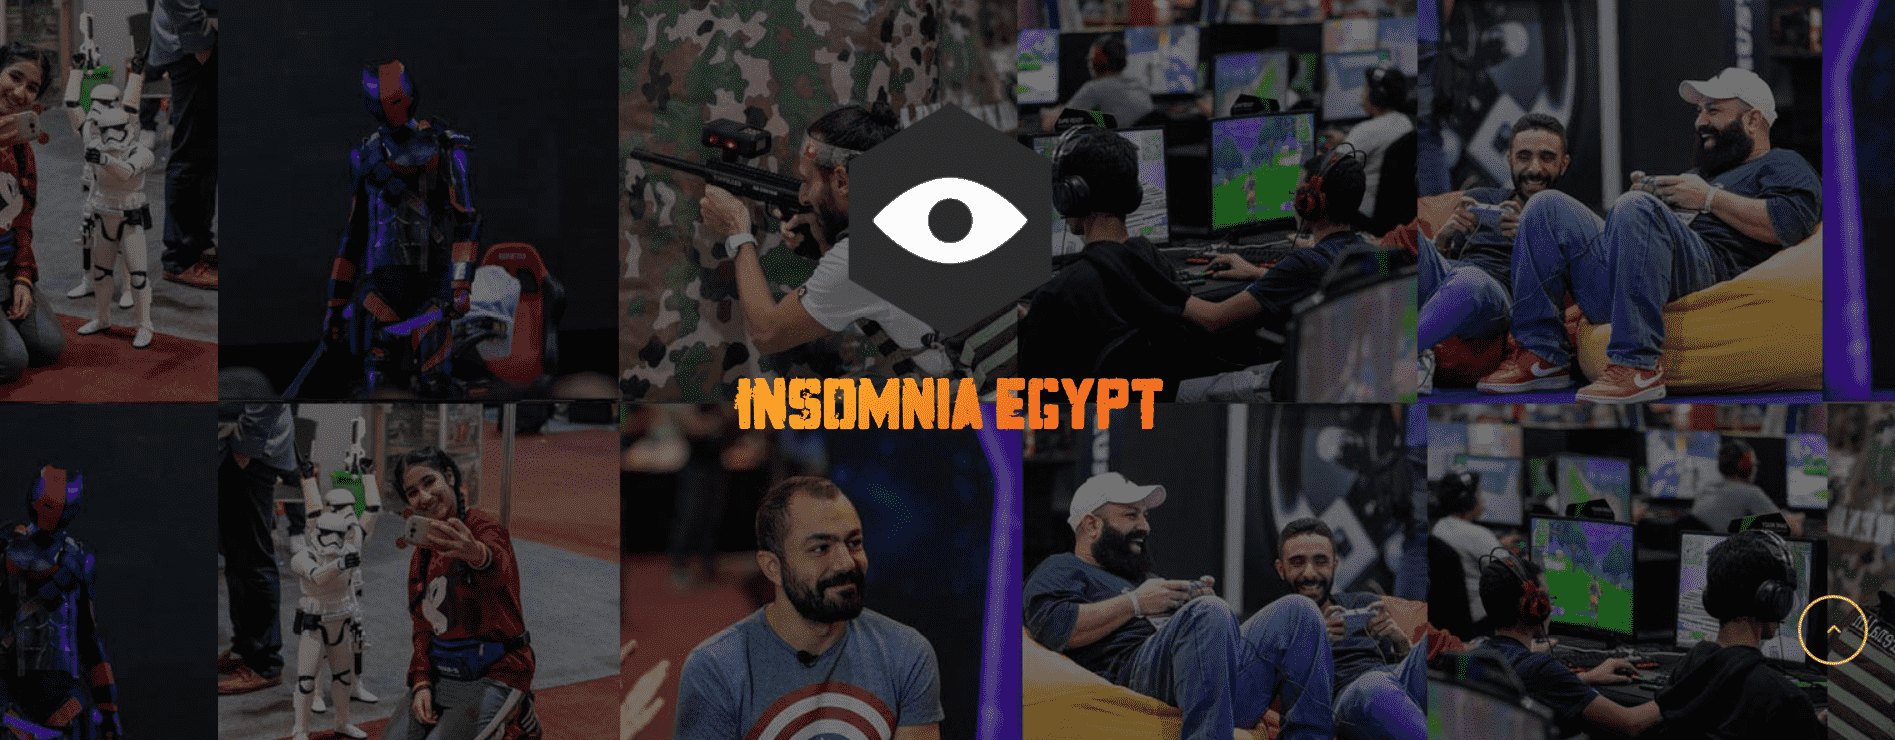 Insomnia Egypt 2019